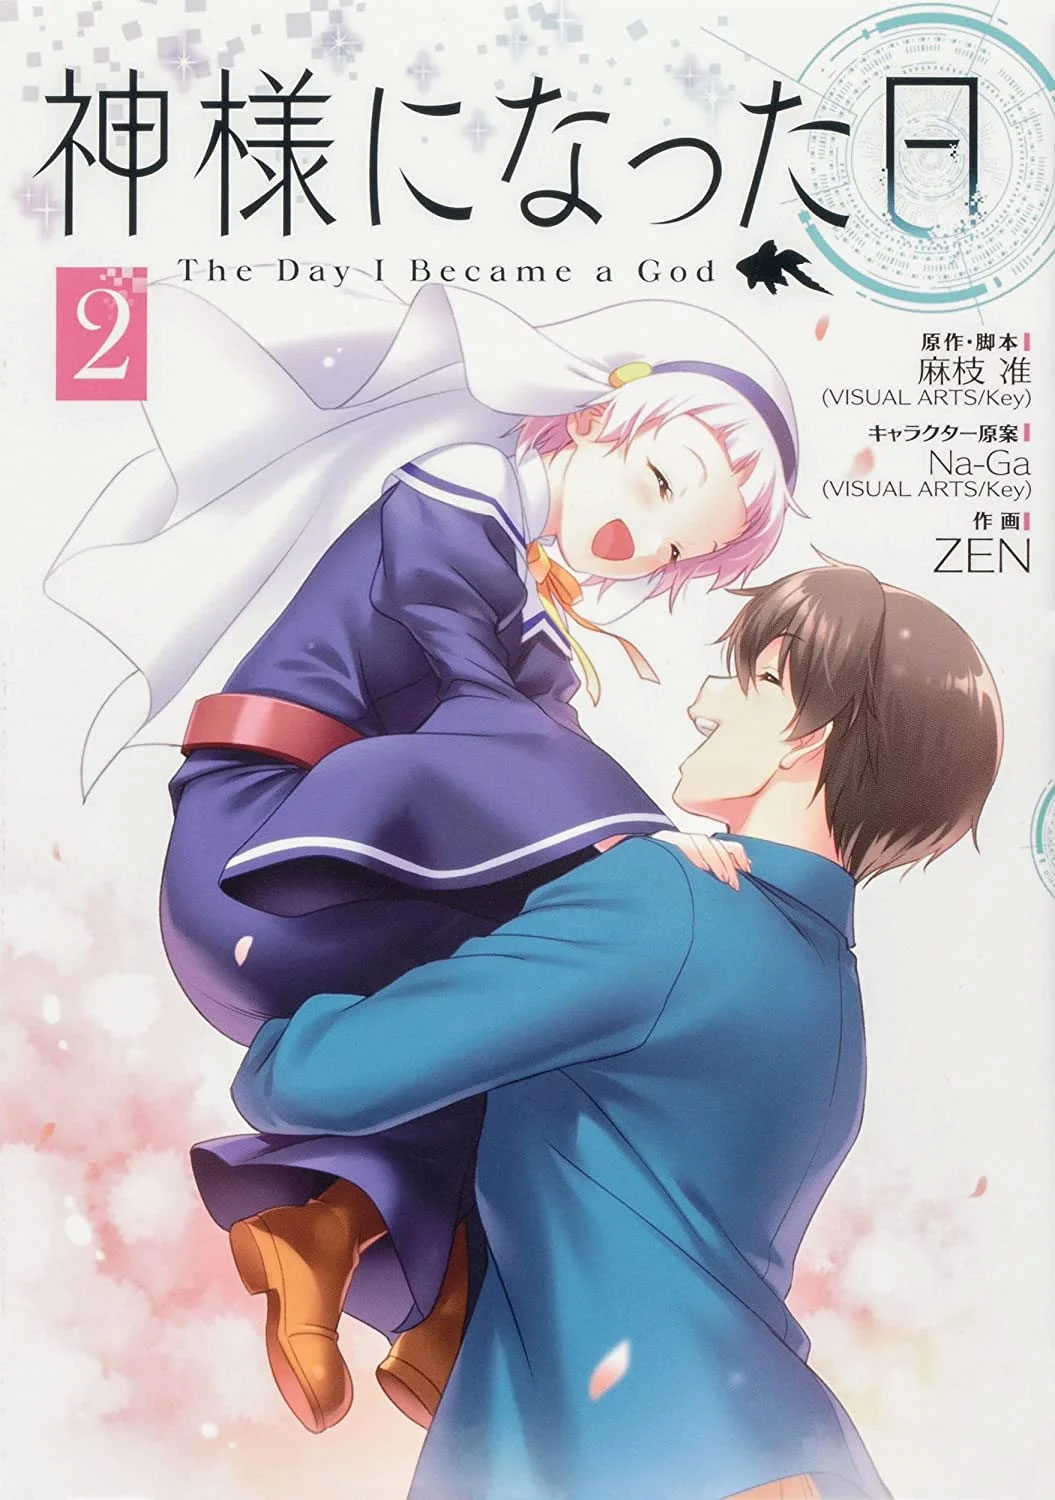 El manga de Kamisama ni Natta Hi revelo la portada de su volumen #2 y ultimo